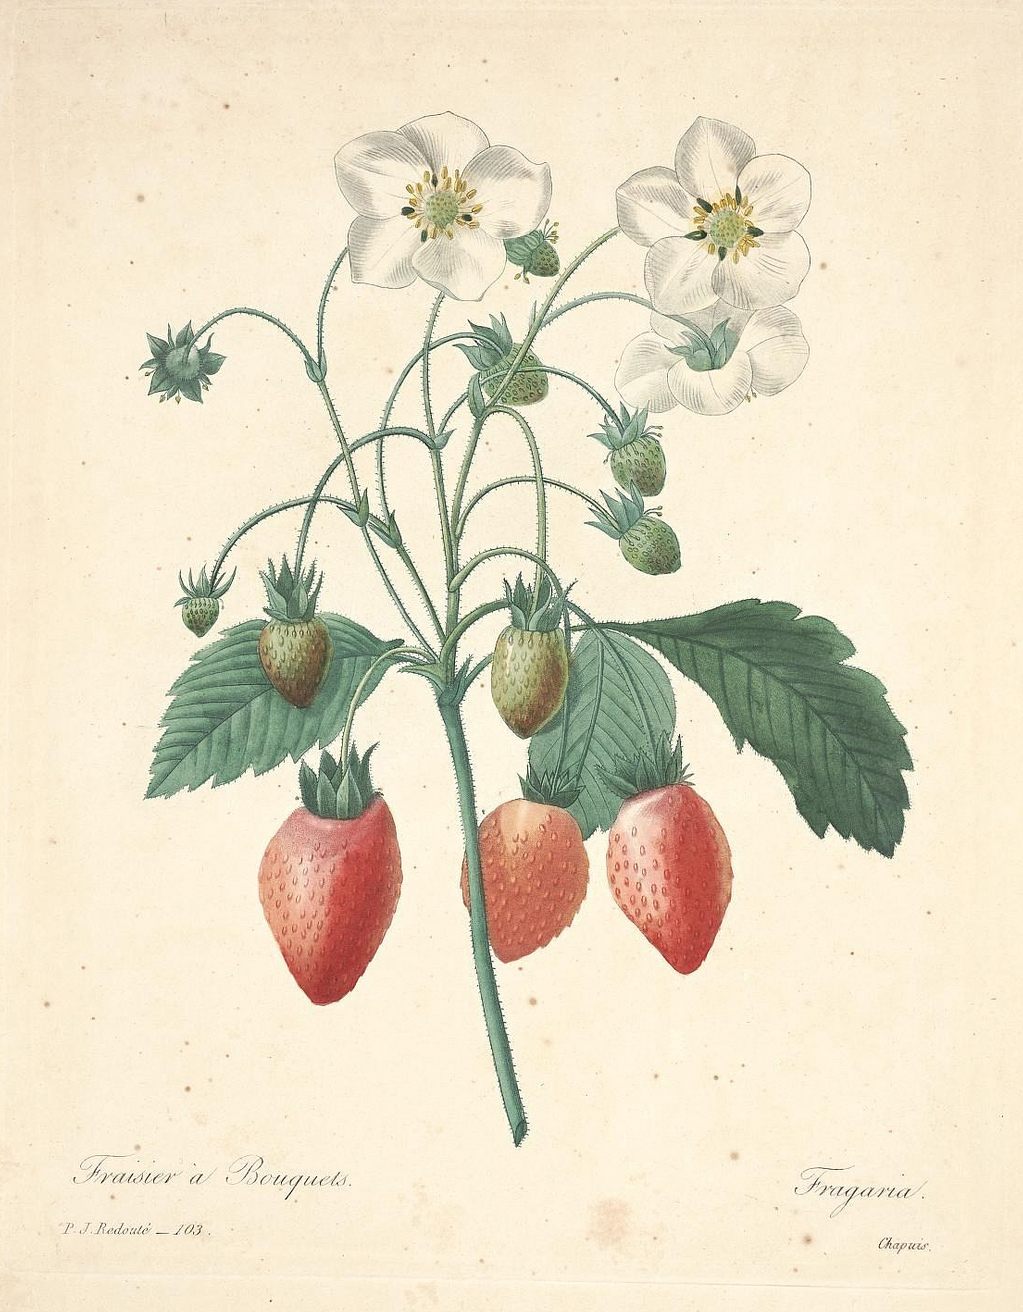 The Short Political Career of Strawberries - Scientific American Blog  Network